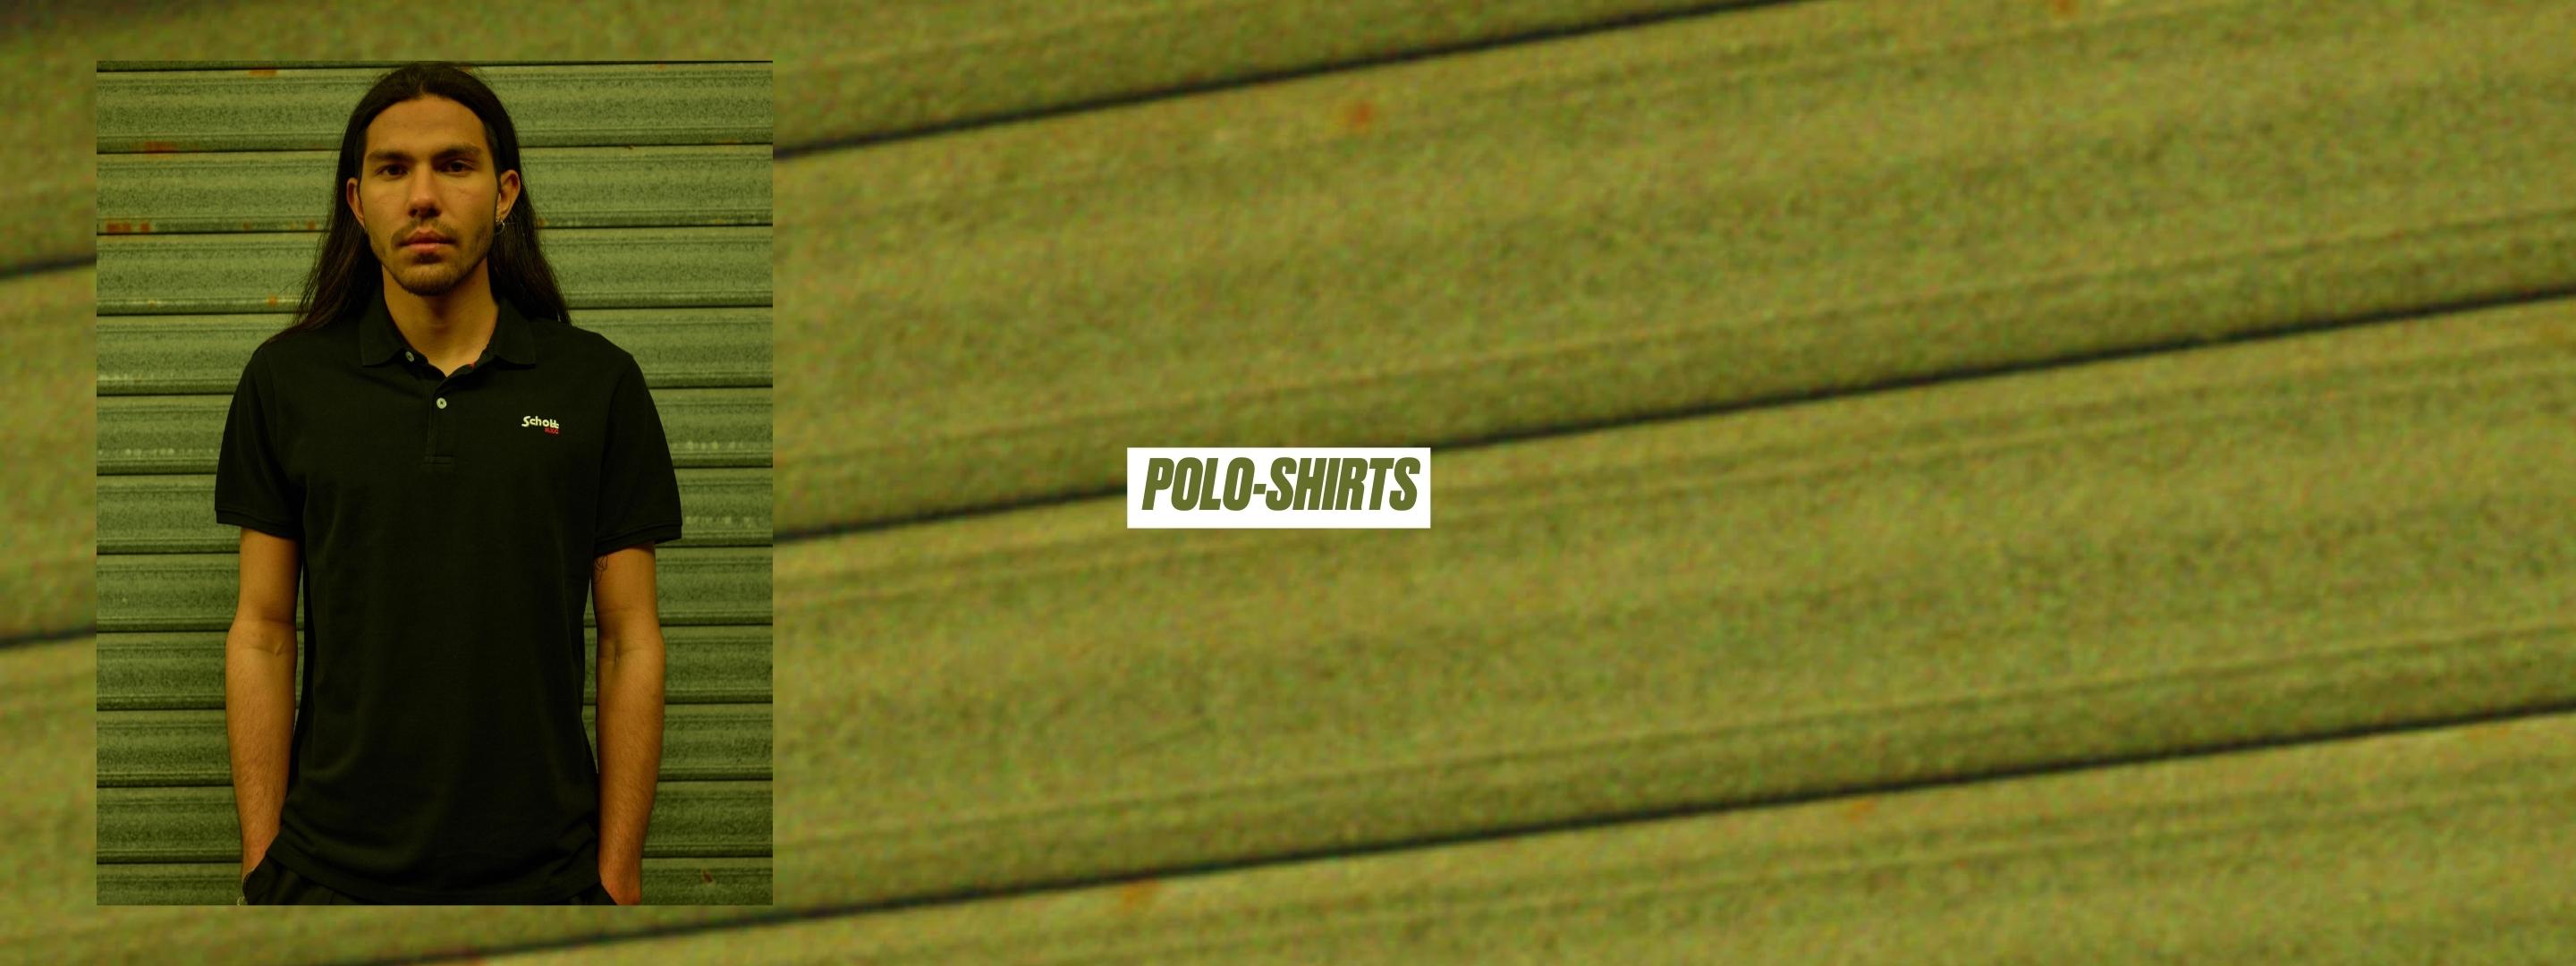 Polo-shirts